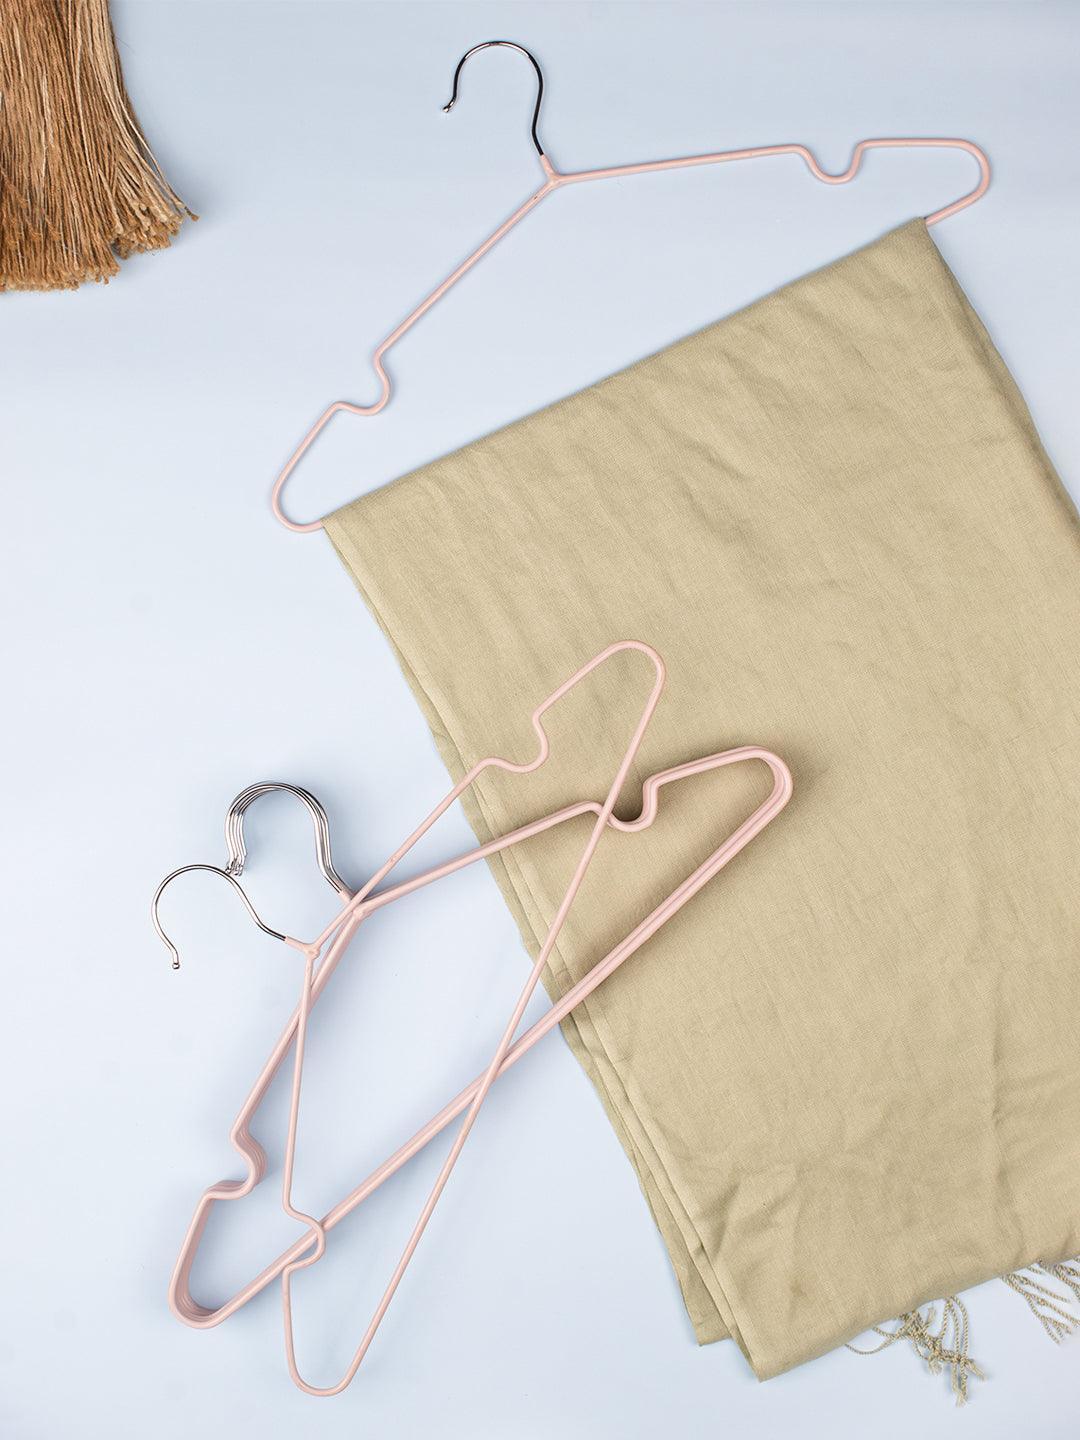 Iron, Cloth Hanger Set Of 6 Pcs, Plain, Glossy : Finish